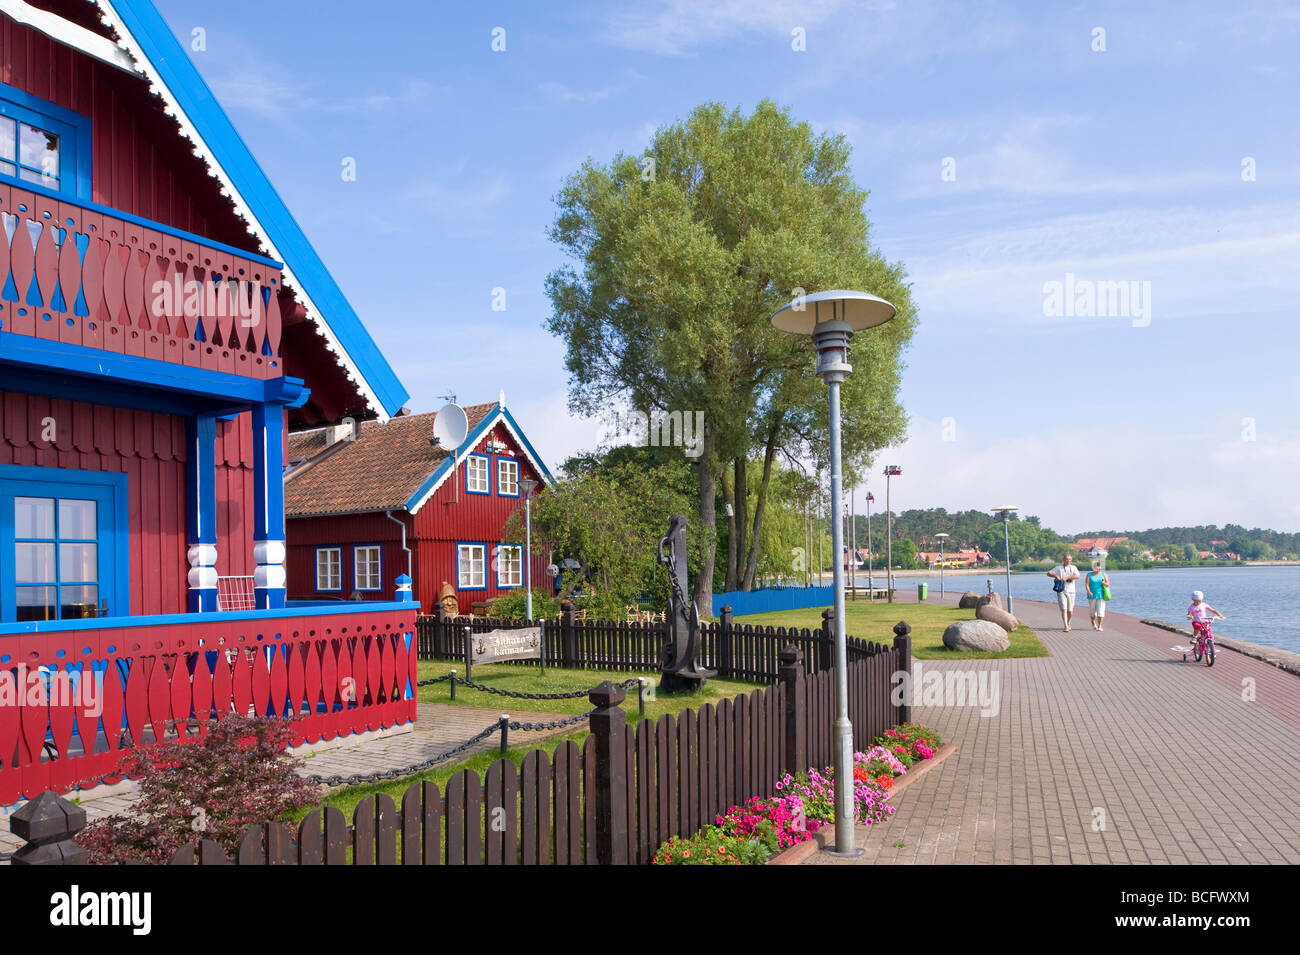 Lokale Holzarchitektur Nida Dorf Neringa Litauen Stockfoto